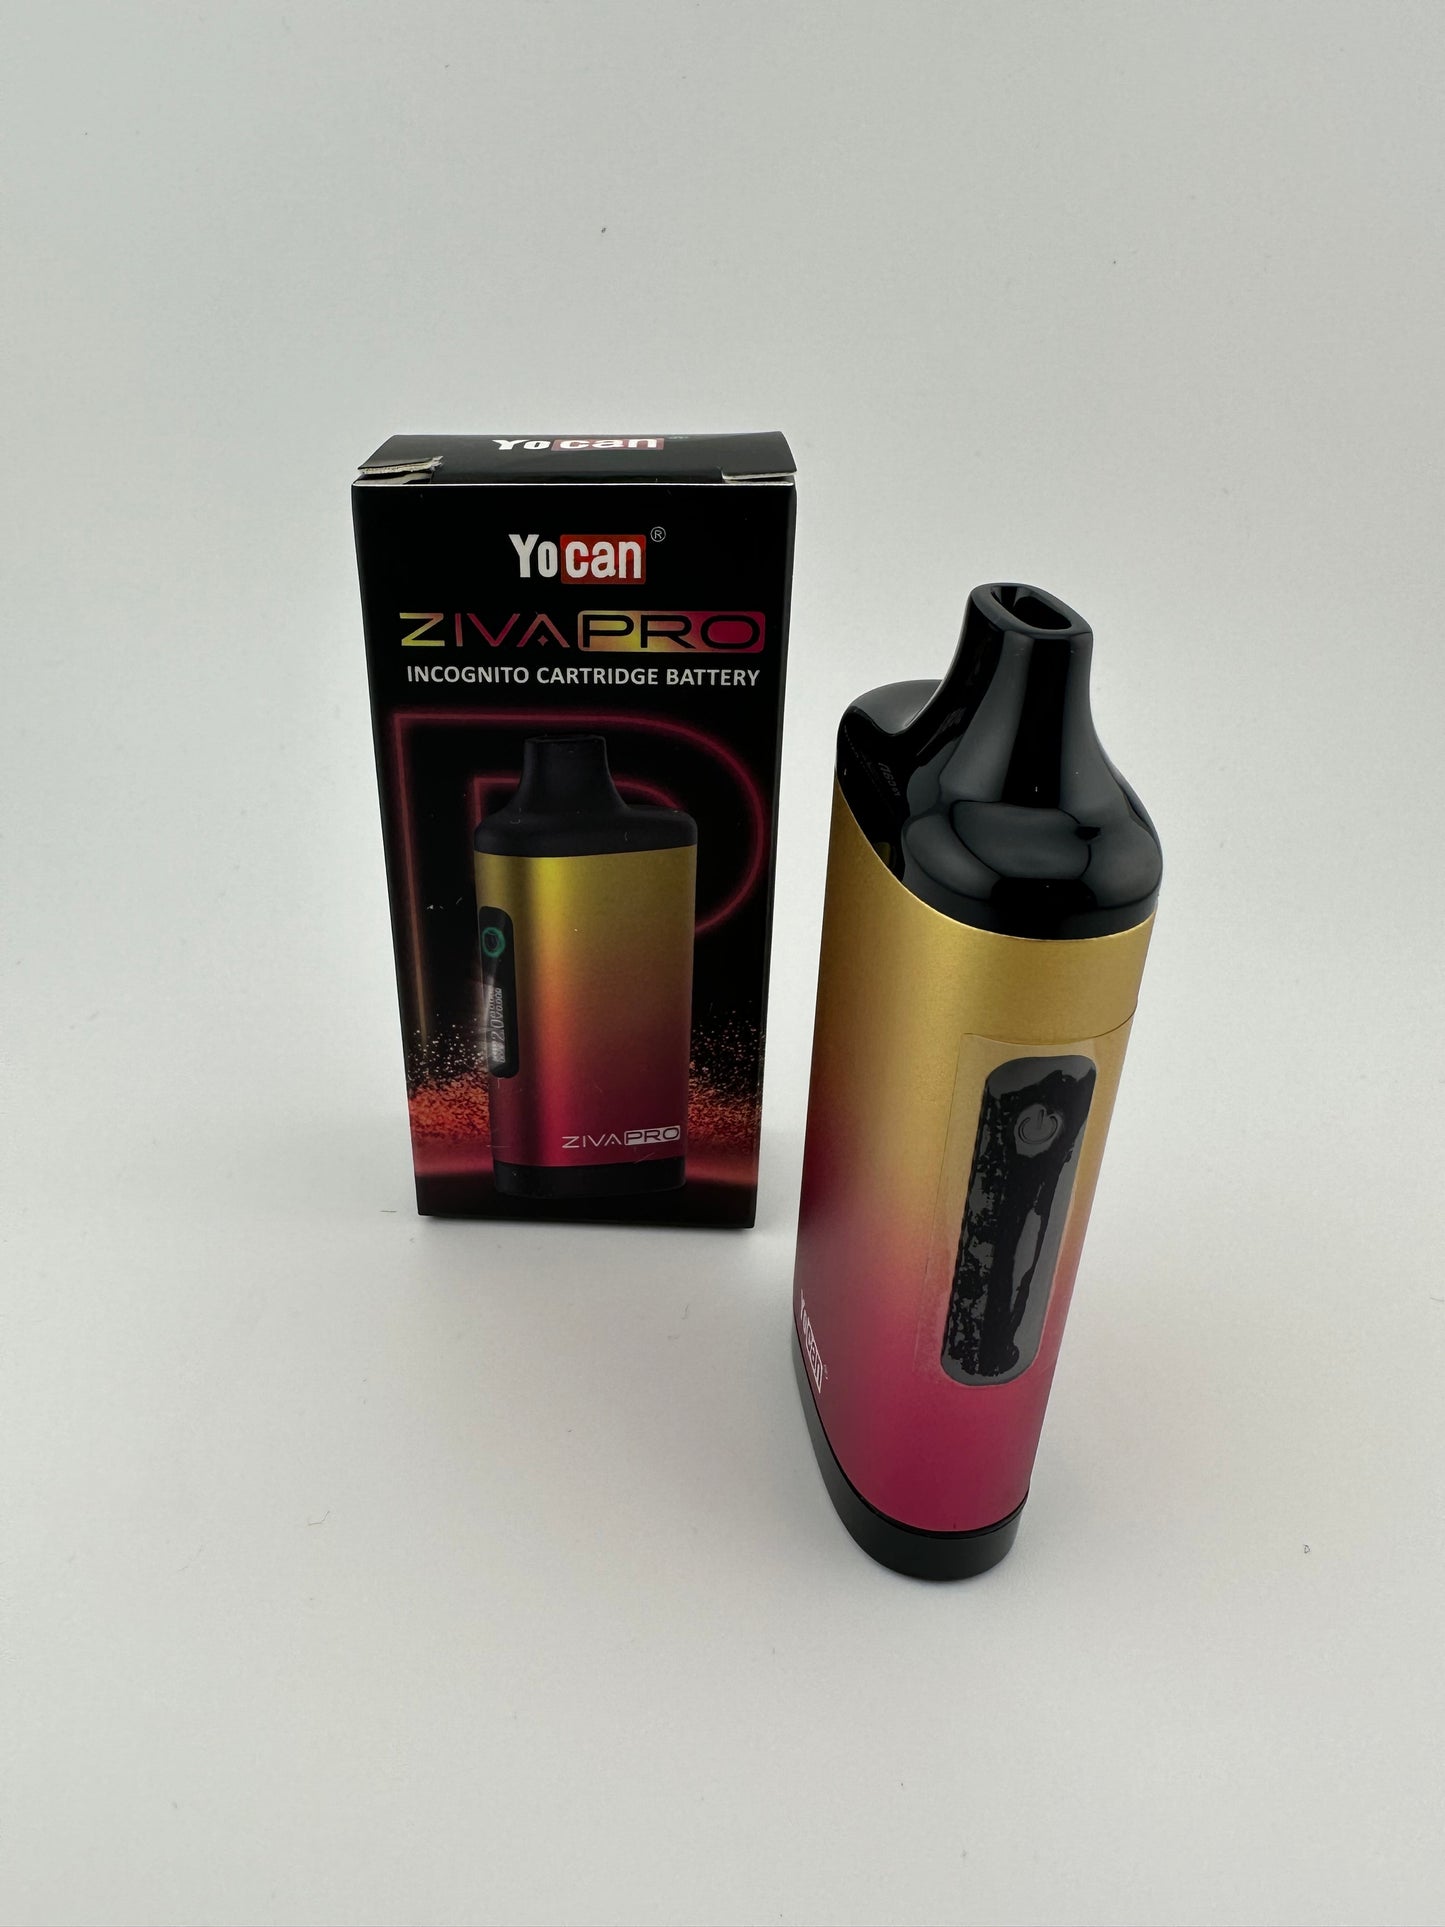 Yocan Ziva Pro Incognito Cart Battery